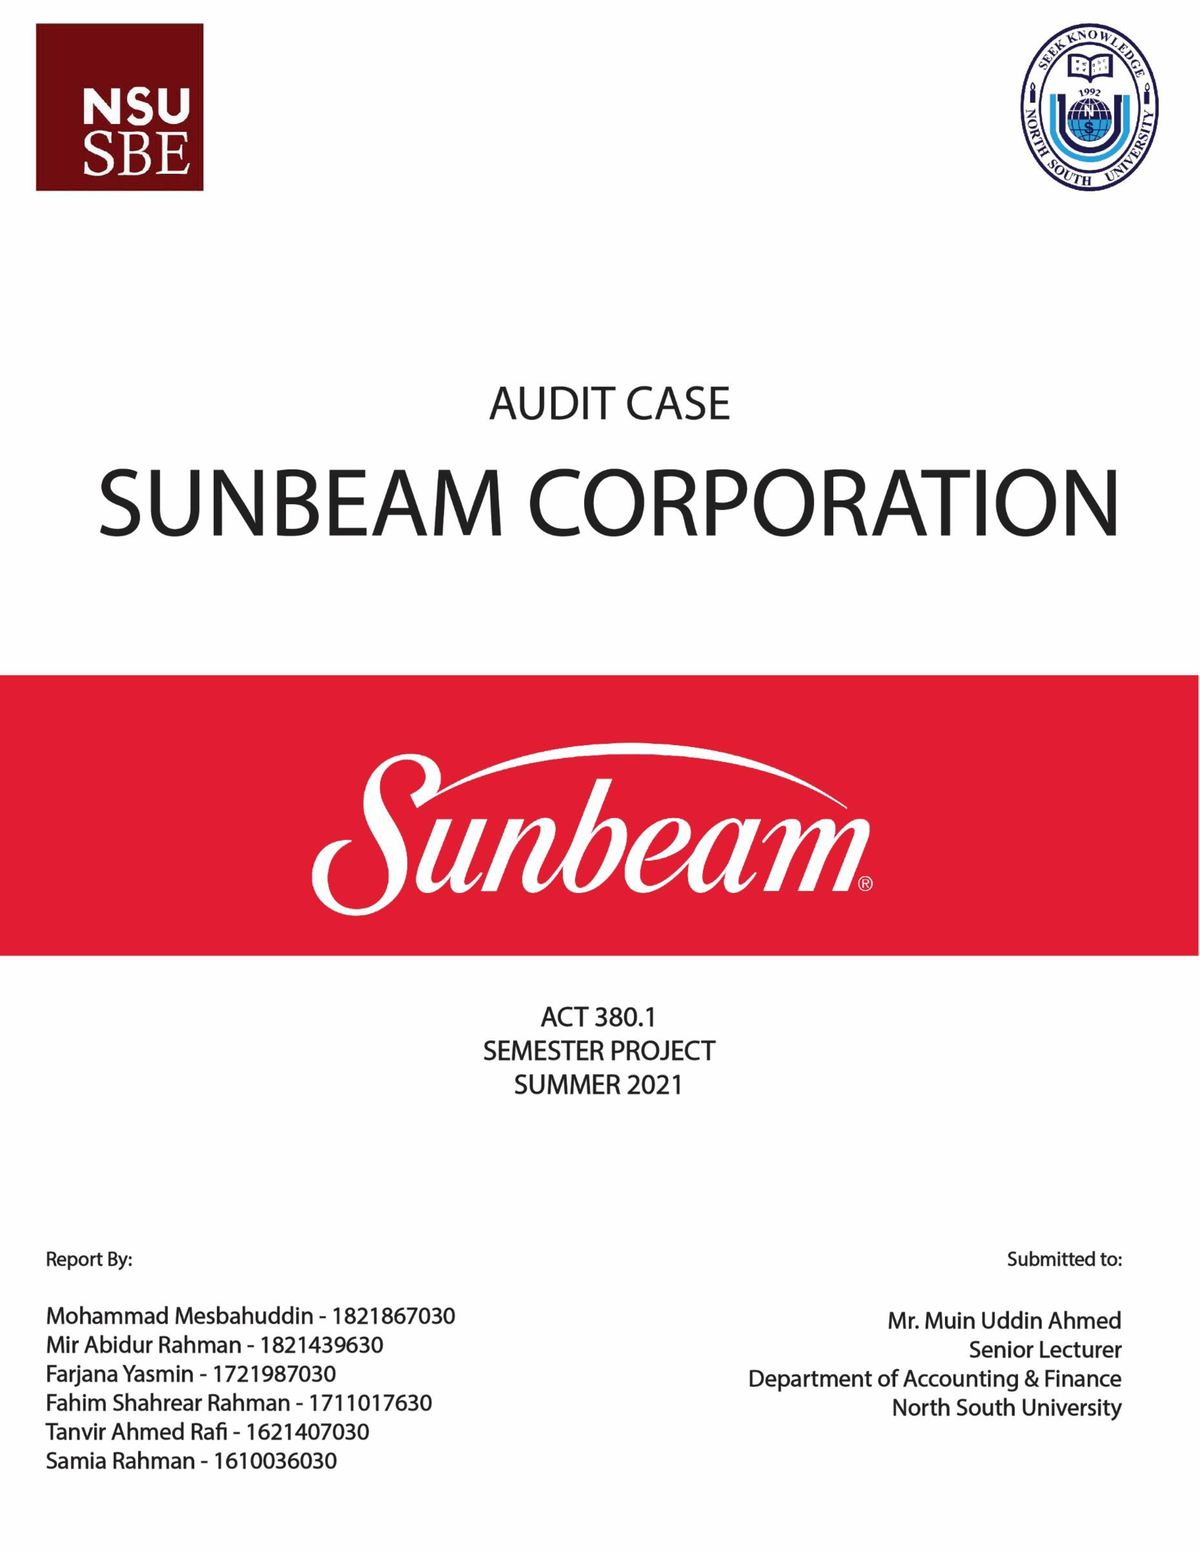 sunbeam scandal